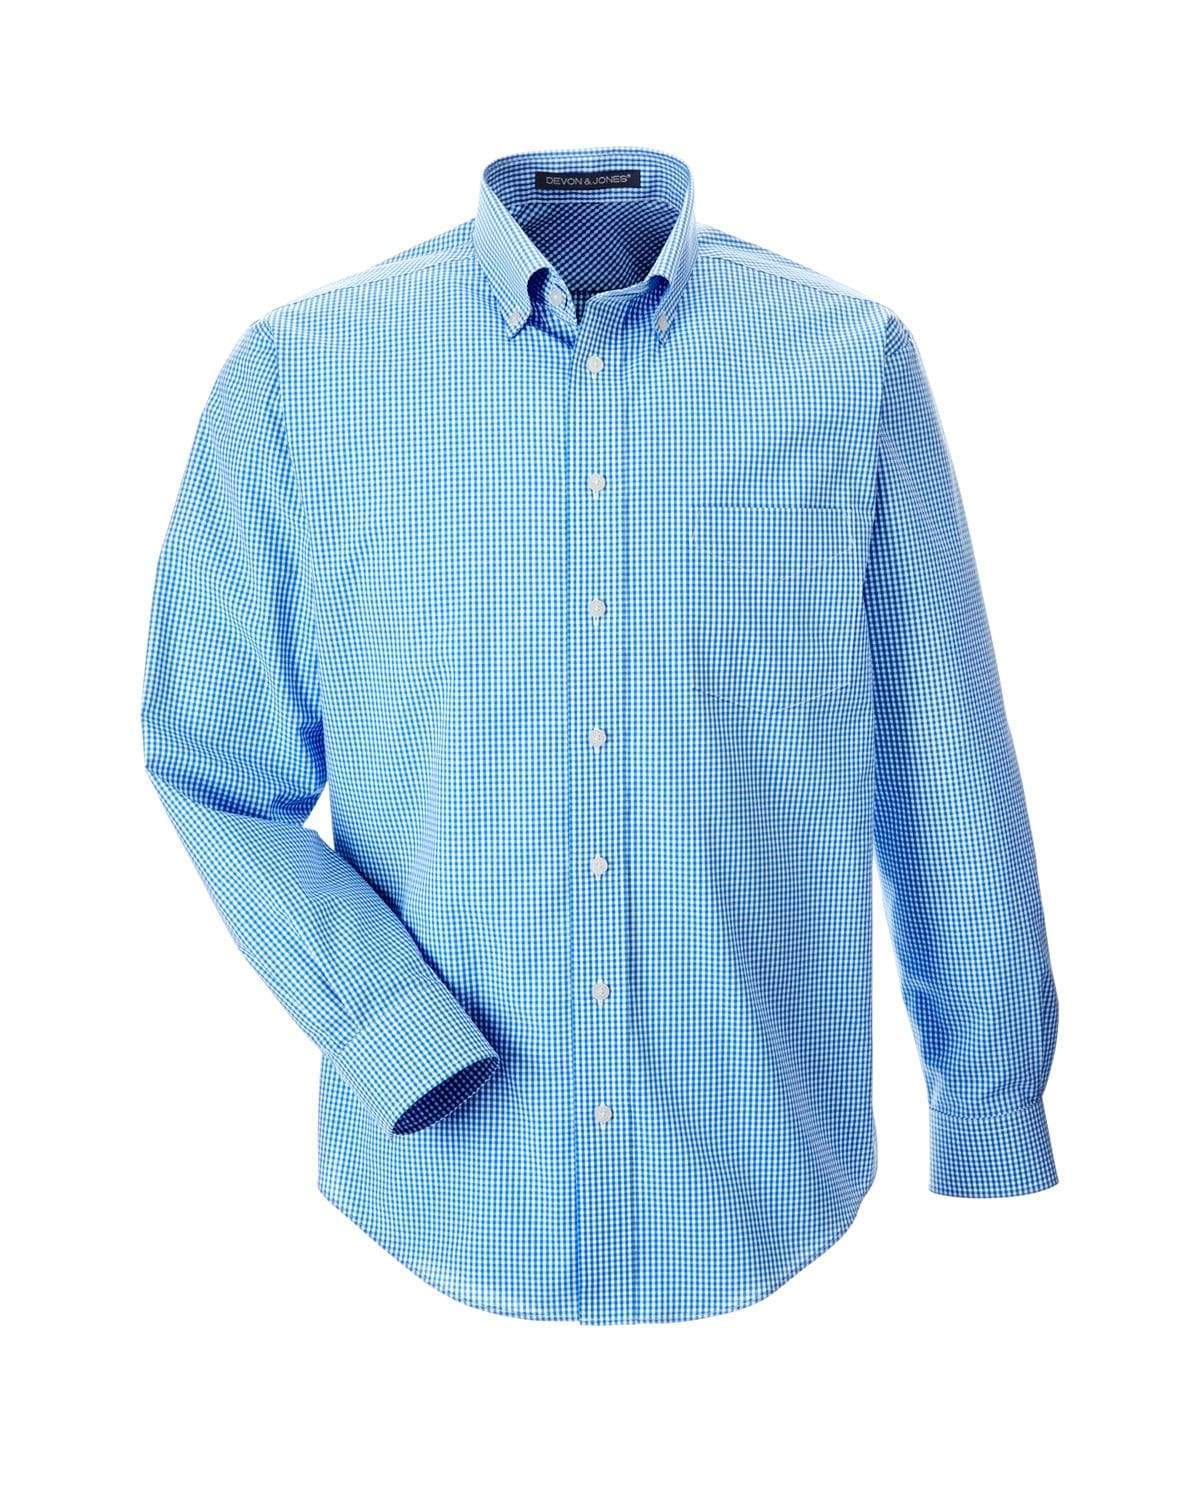 Devon & Jones Woven Shirts S / FRENCH BLUE Devon & Jones Men's Crown Collection™ Gingham Check